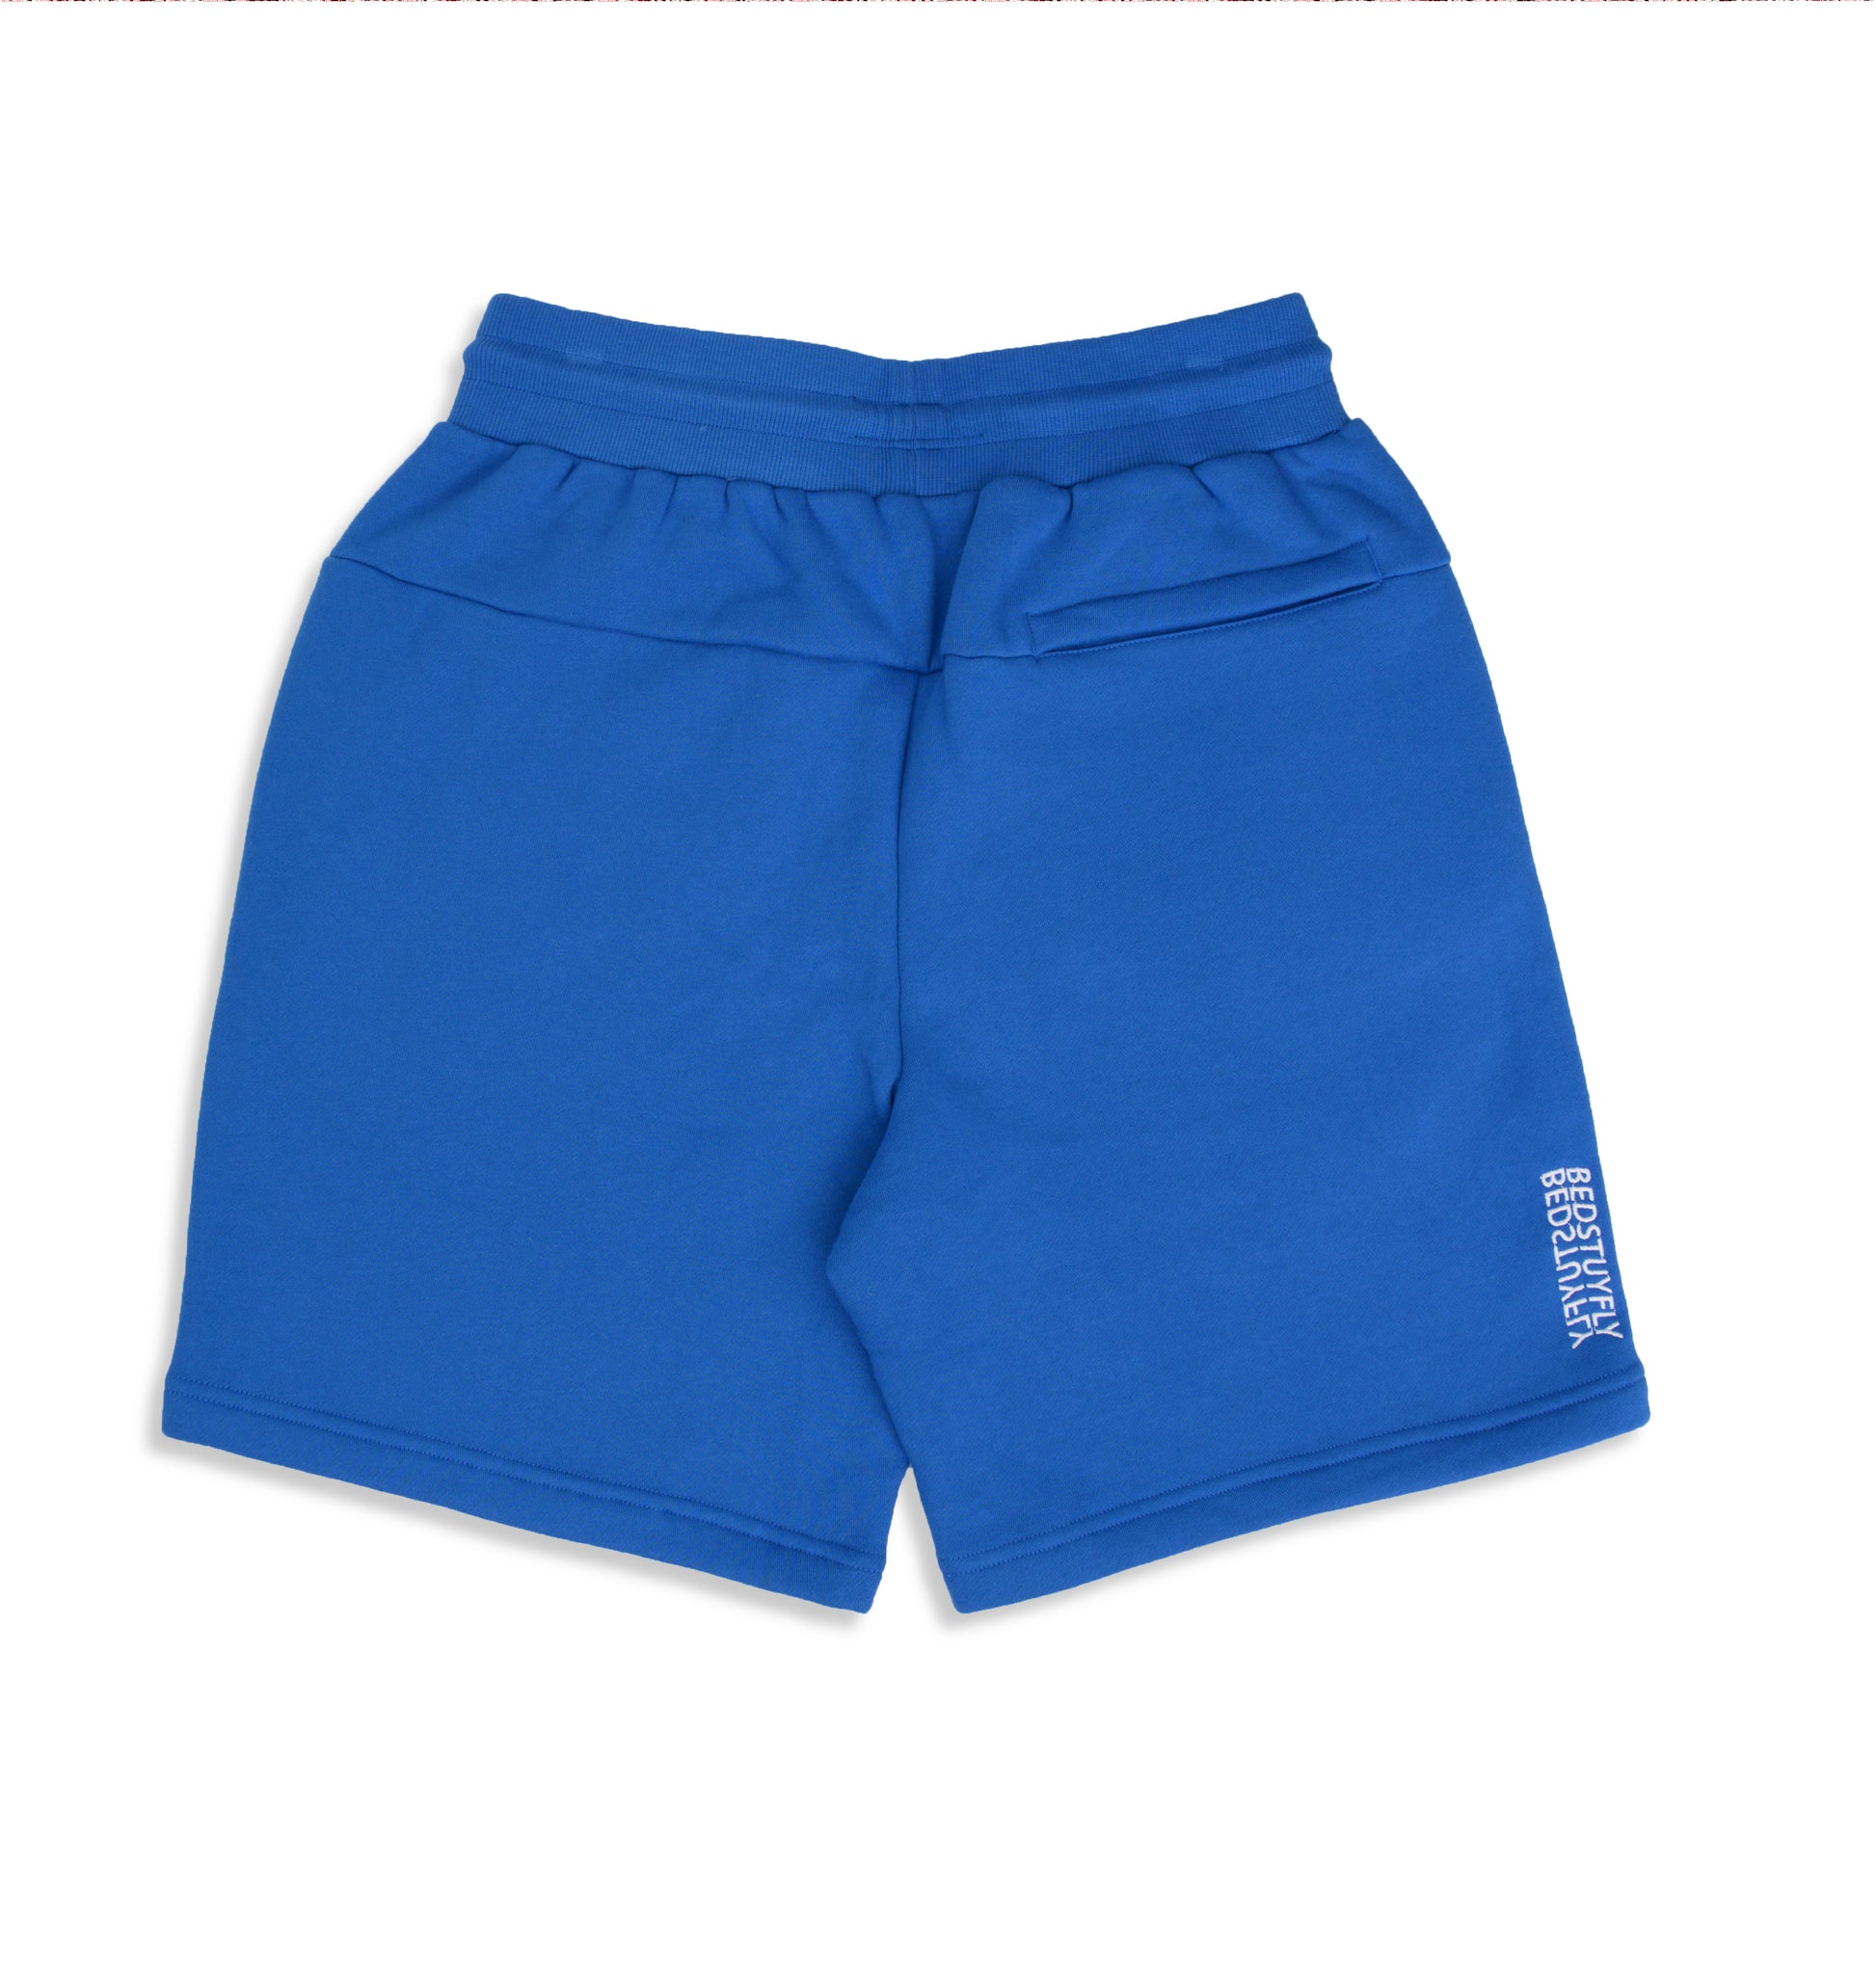 Park Shorts (Blue) - Bedstuyfly